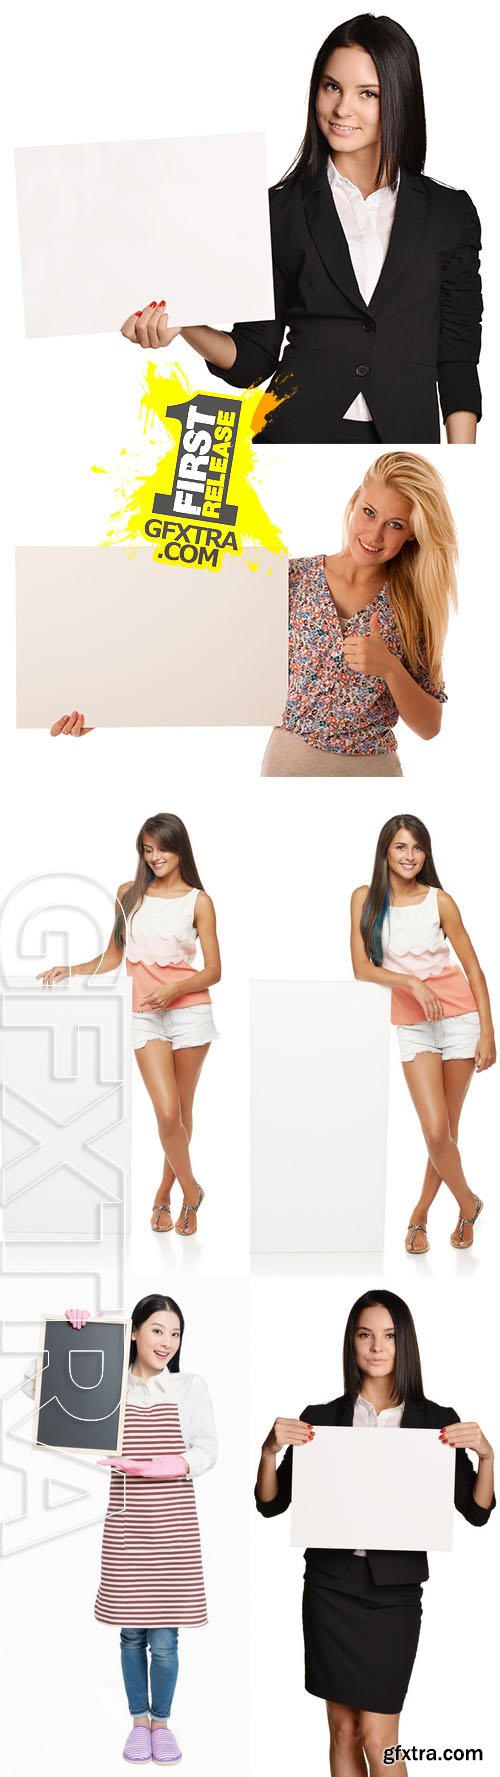 Stock Photos - Girls Holding Board on White Background